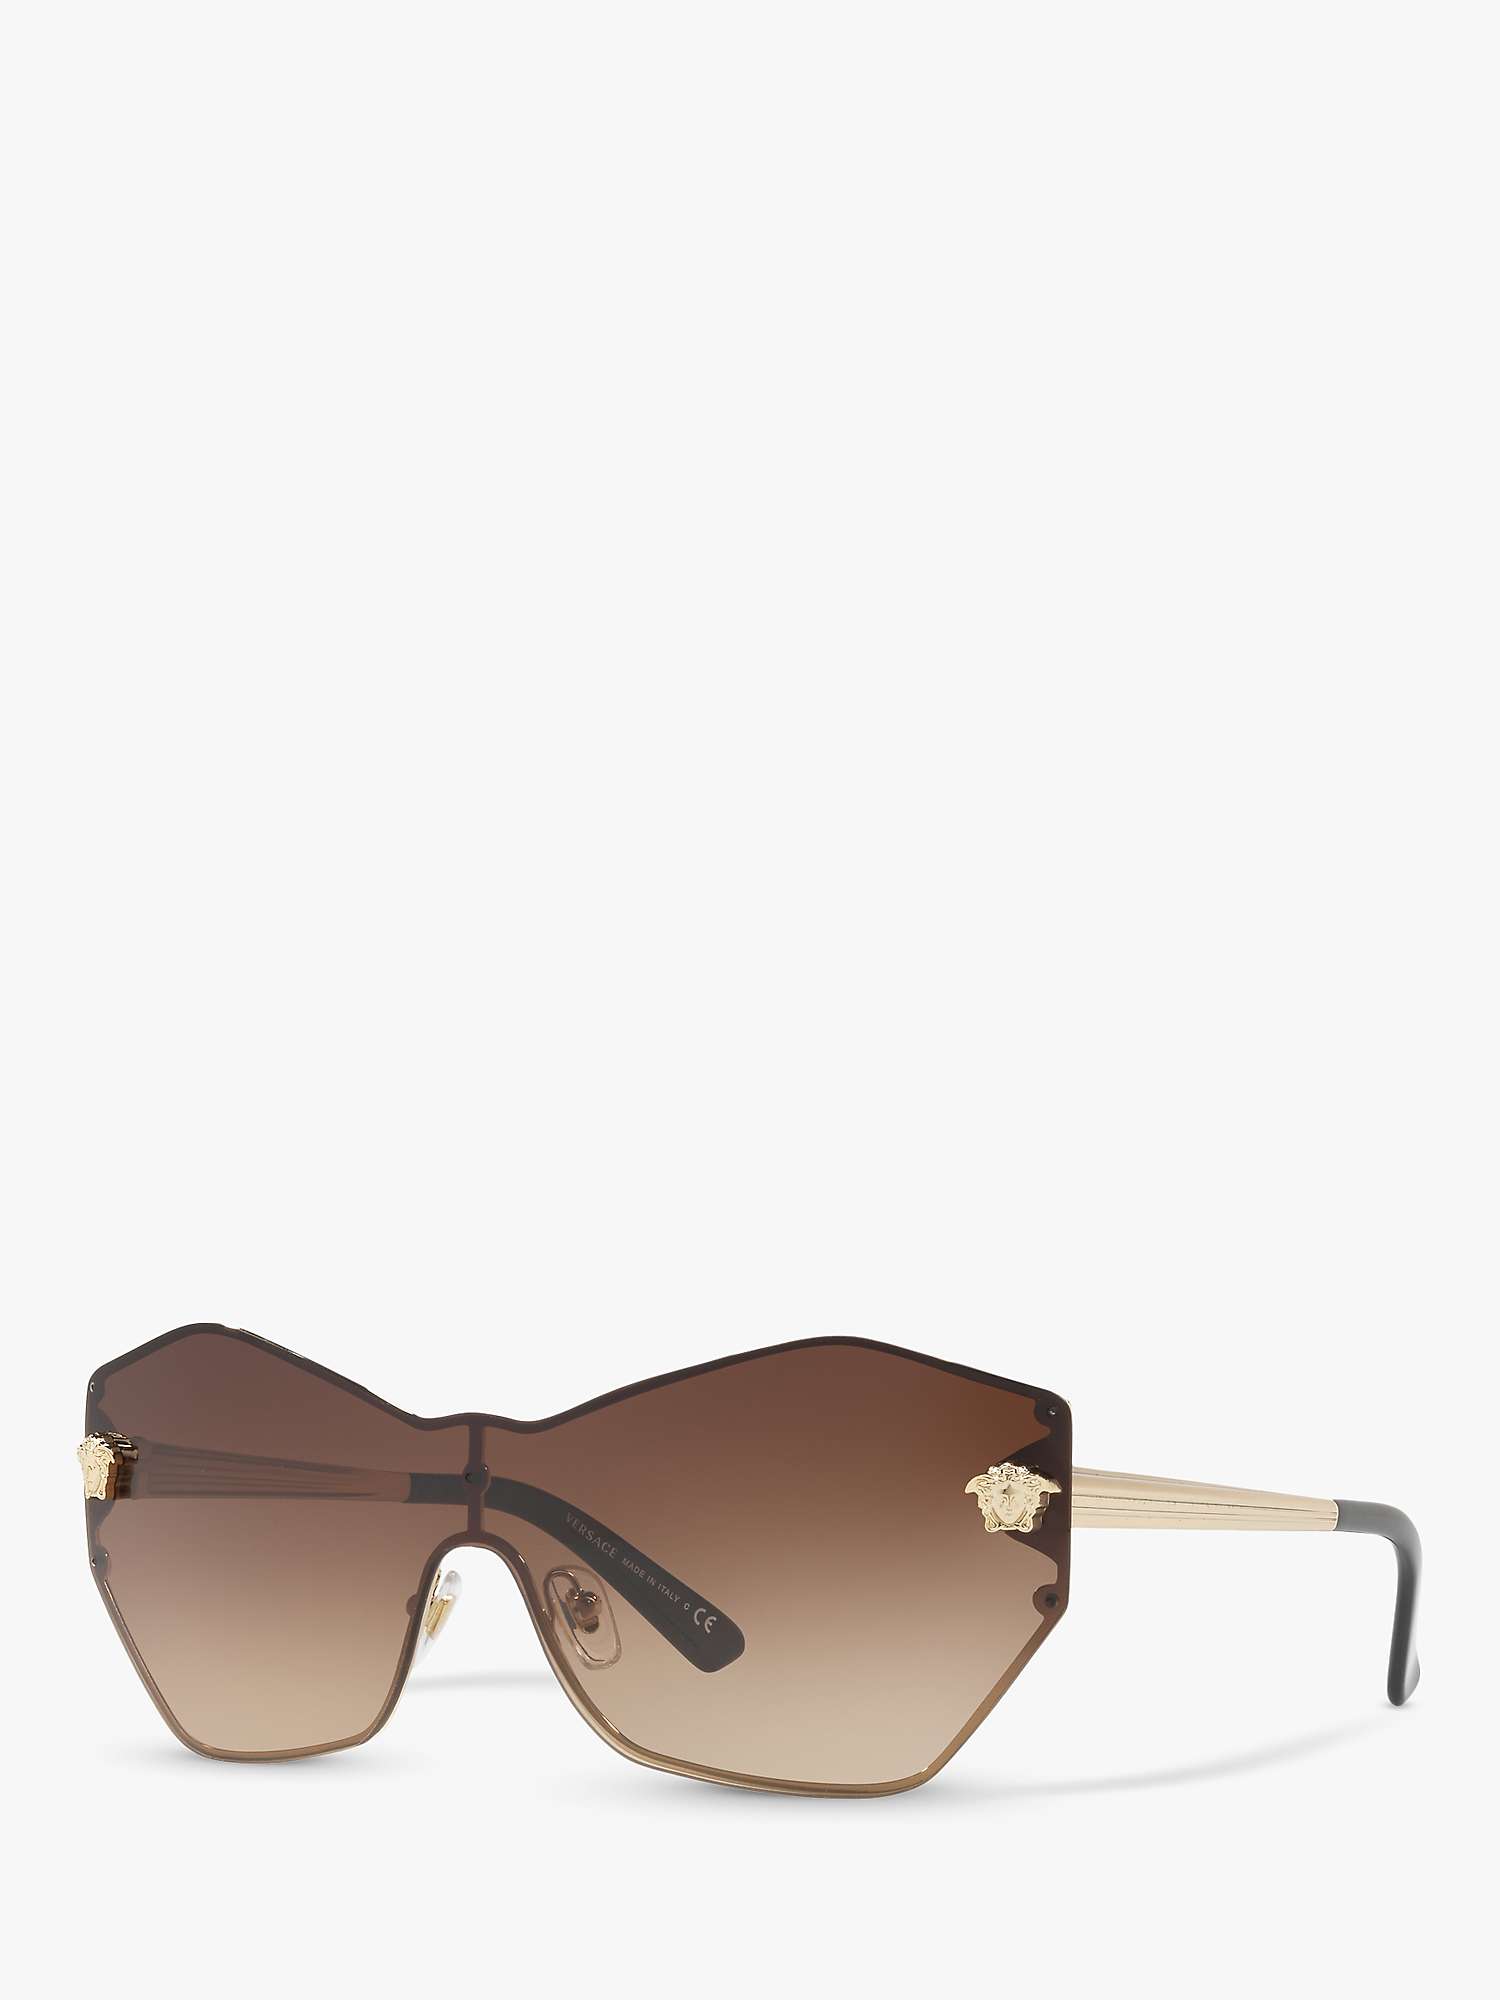 Buy Versace VE2182 Women's Irreglar Sunglasses, Pale Gold/Brown Gradient Online at johnlewis.com